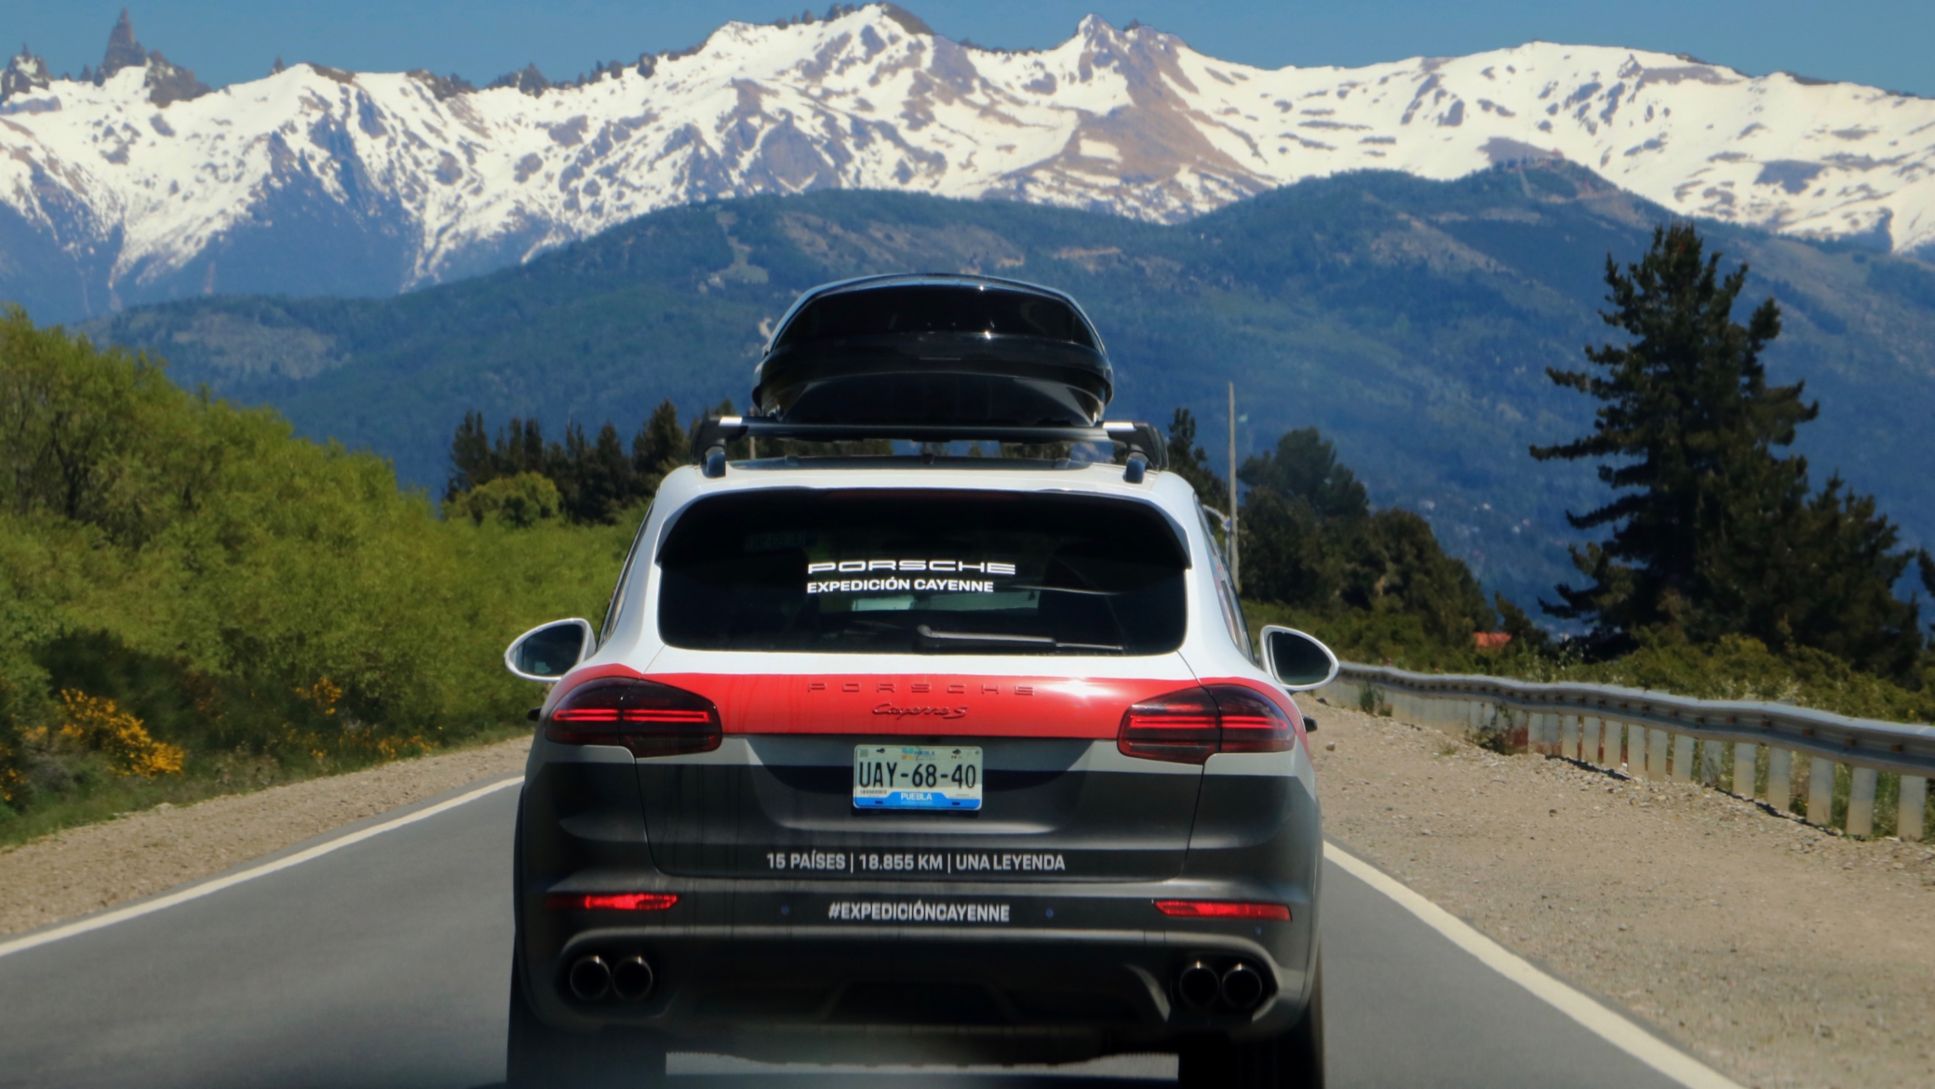 Cayenne S, Expedicion Cayenne, Andengebirge, San Carlos de Bariloche, Argentinien, 2018, Porsche AG